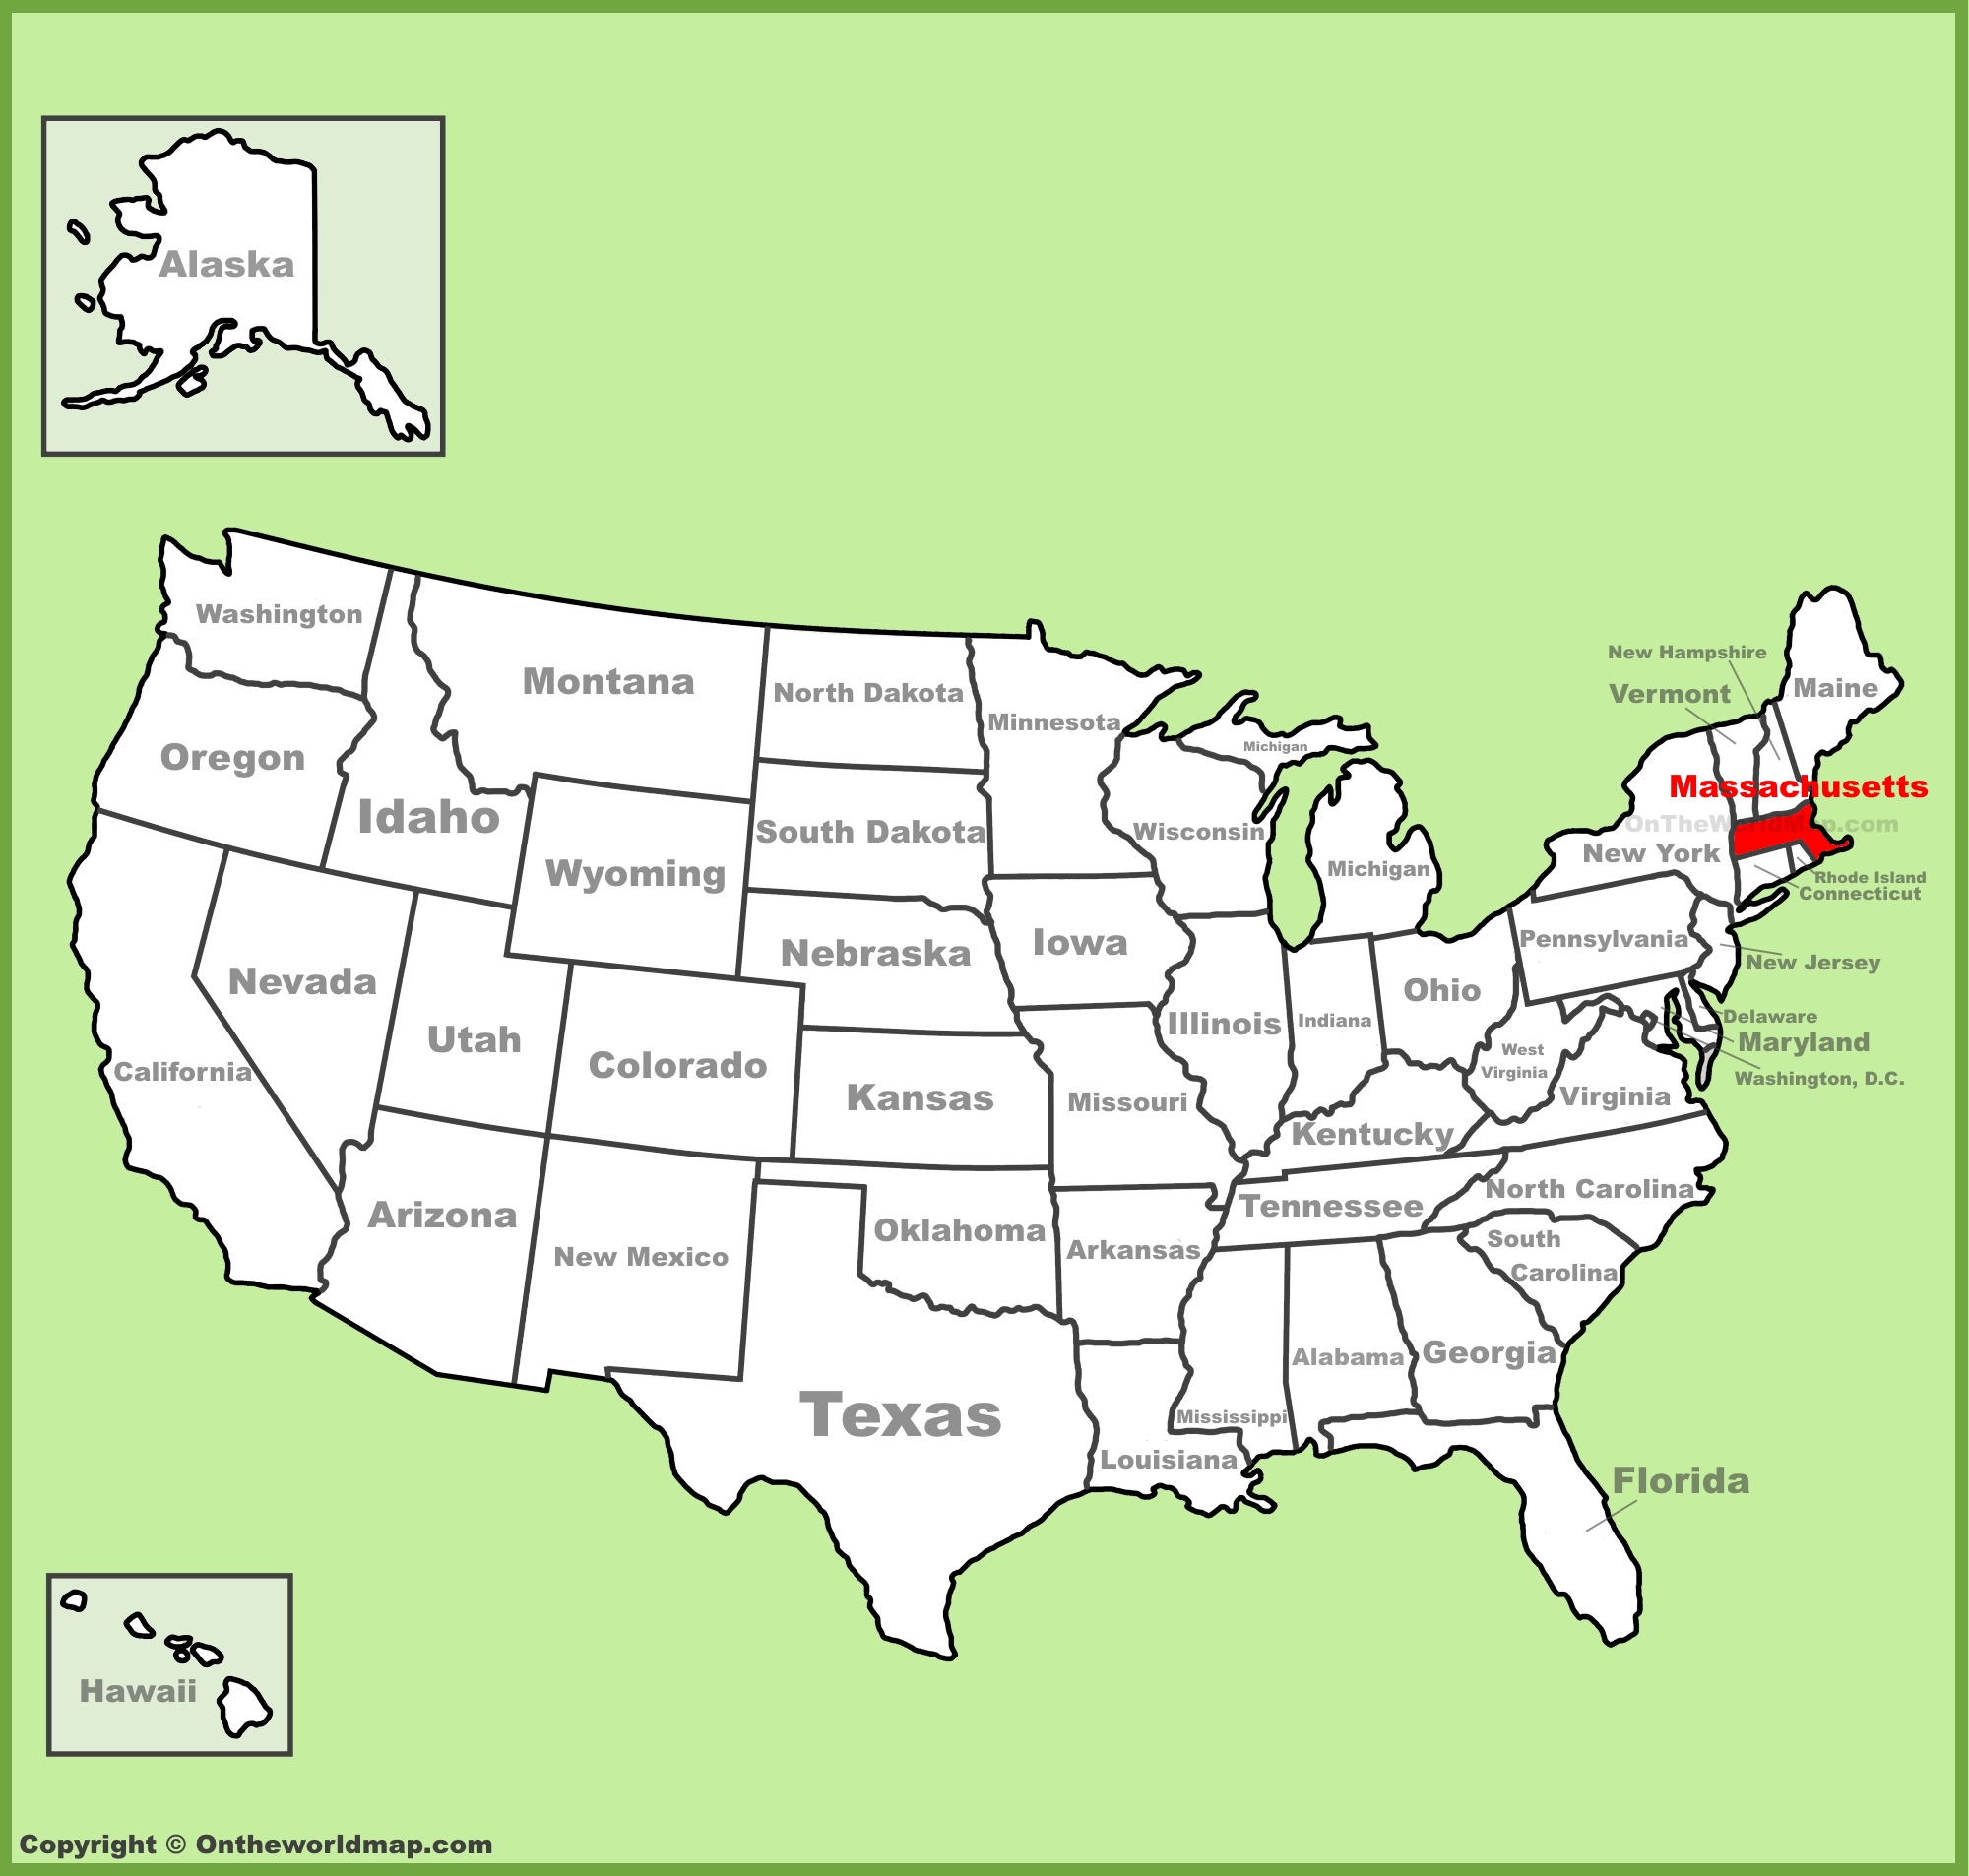 massachusetts on the us map Massachusetts Location On The U S Map massachusetts on the us map